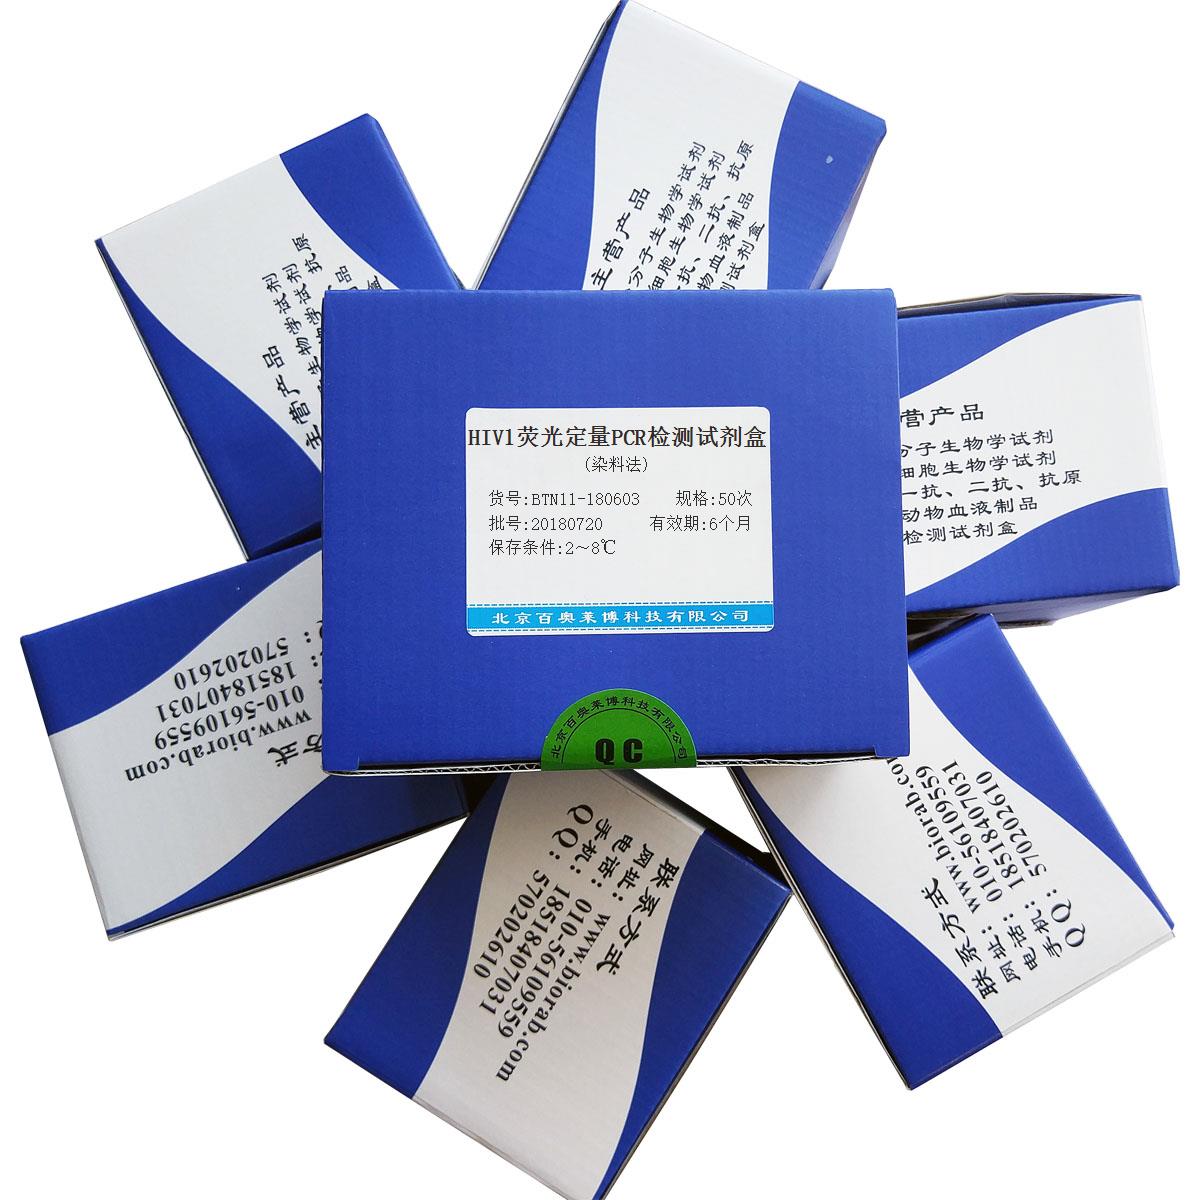 HIV1荧光定量PCR检测试剂盒(染料法)